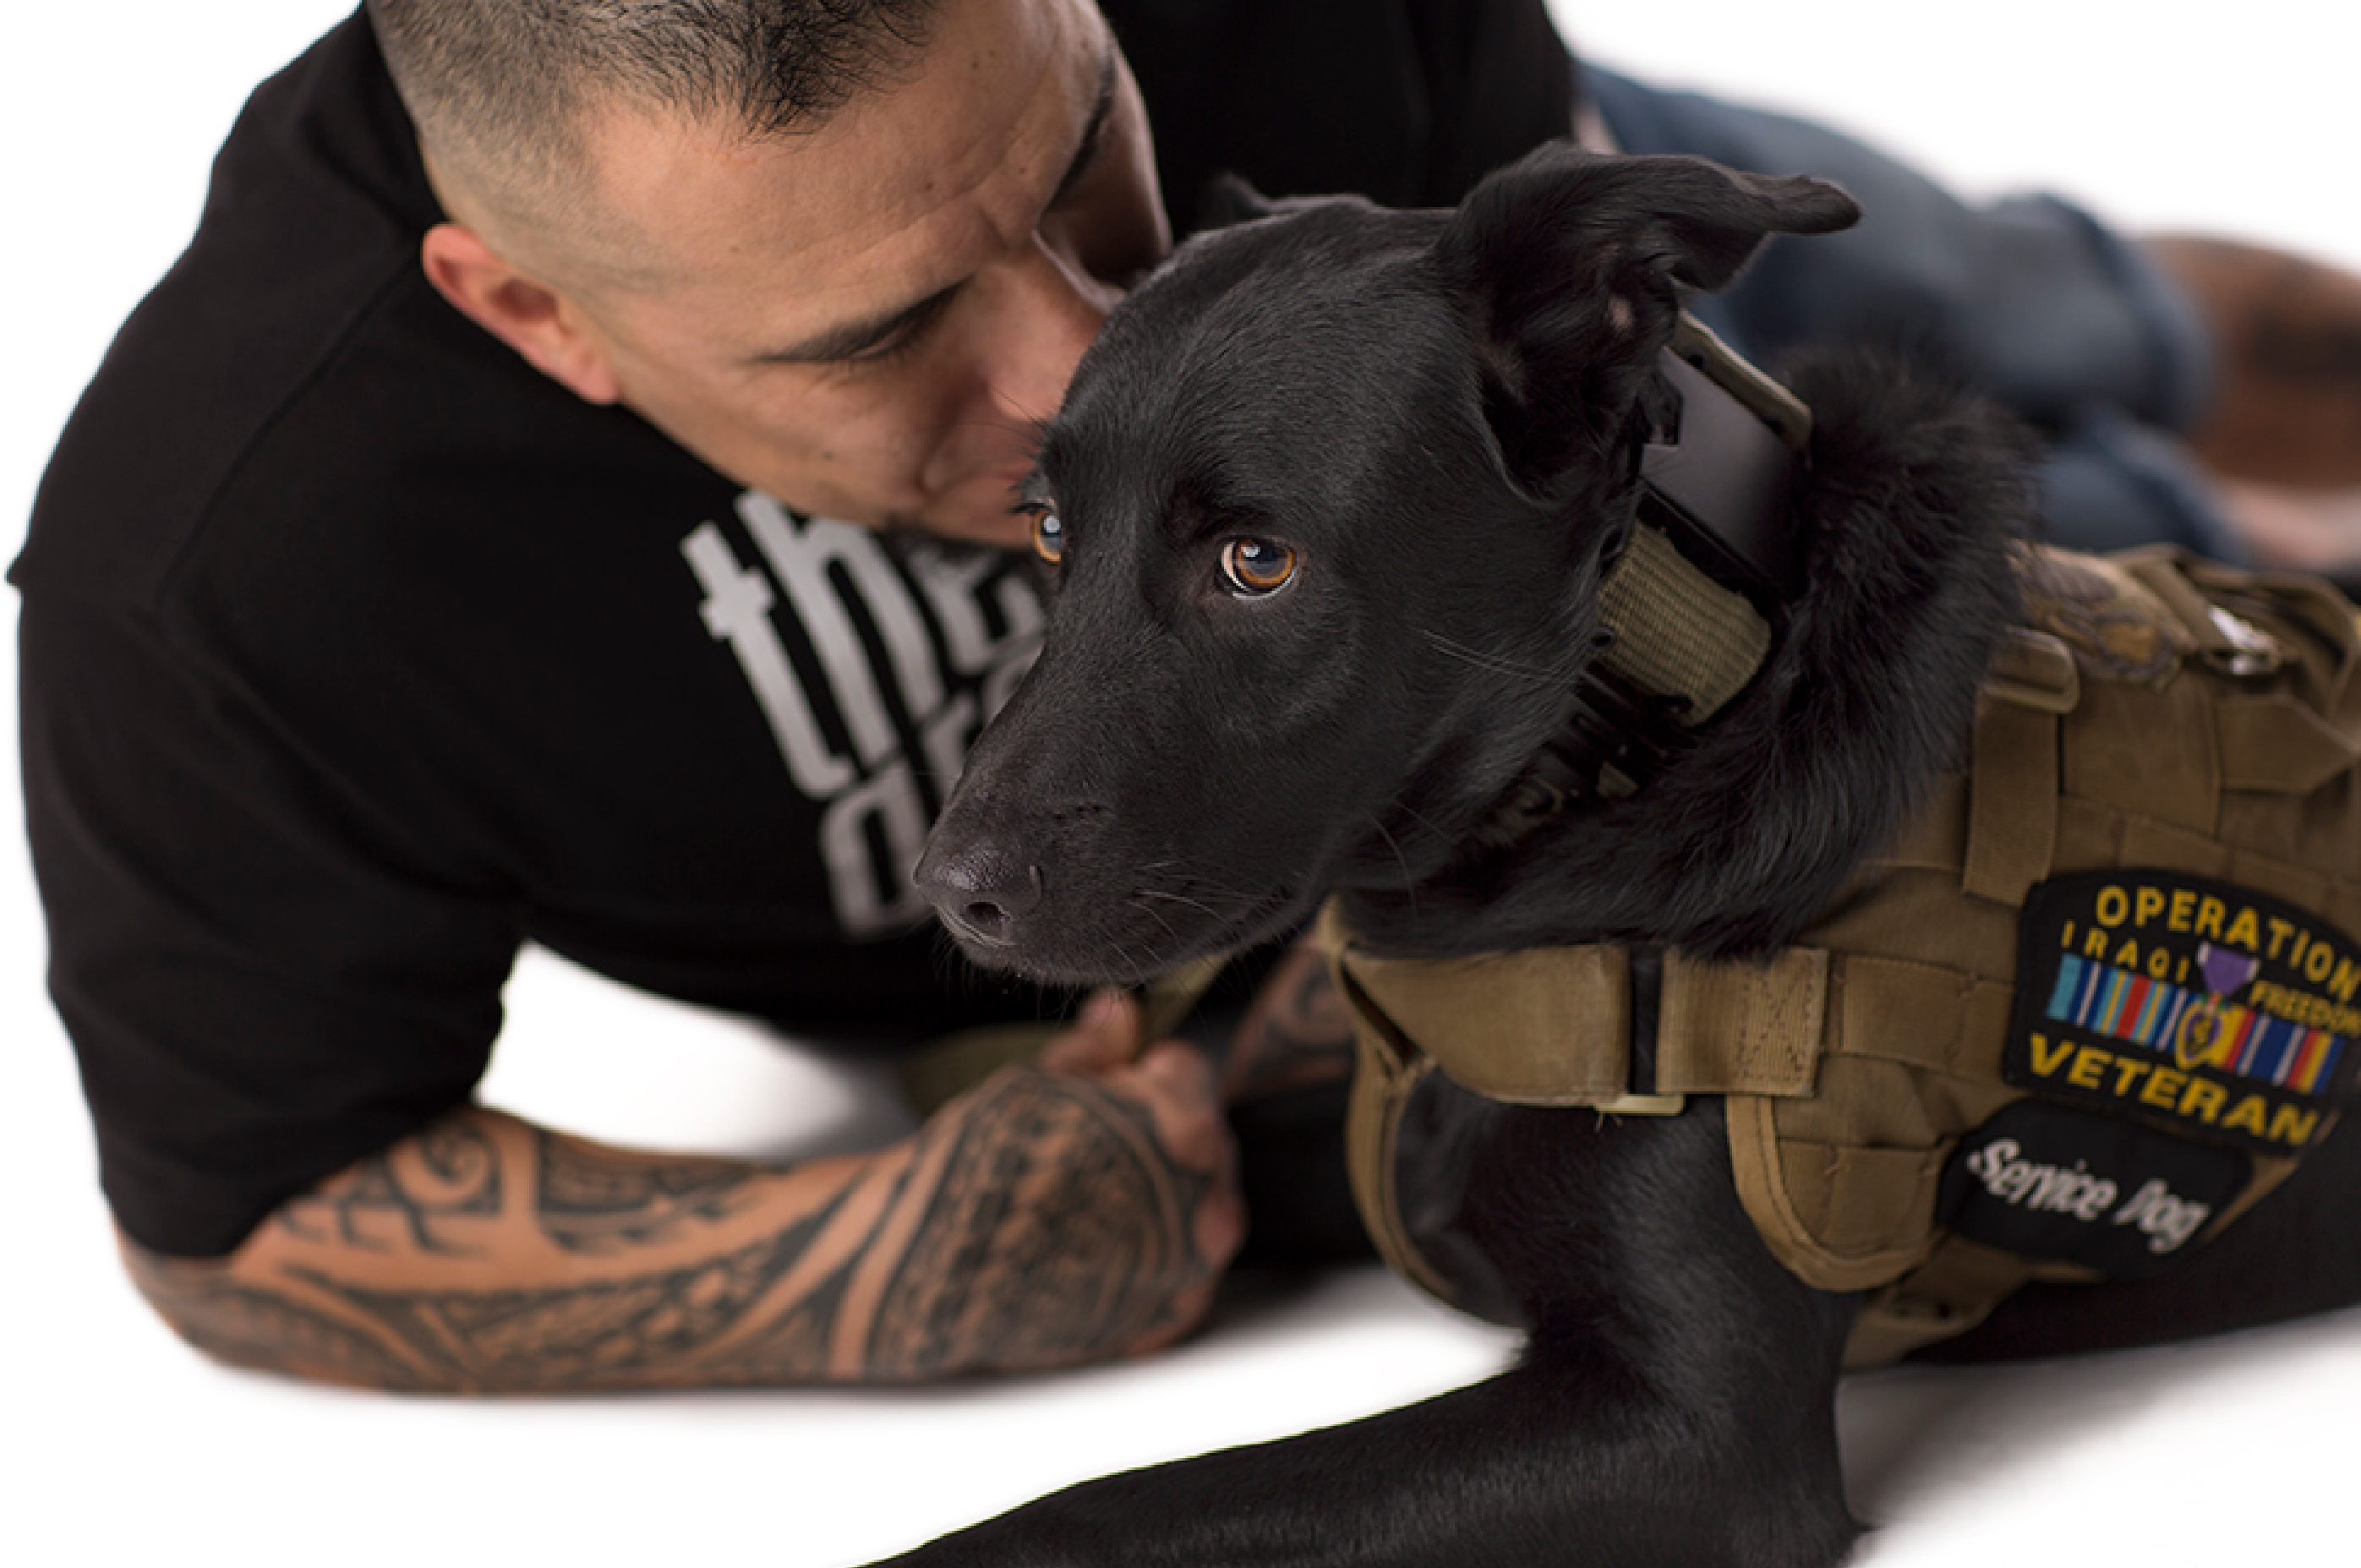 Veteran with his black service dog